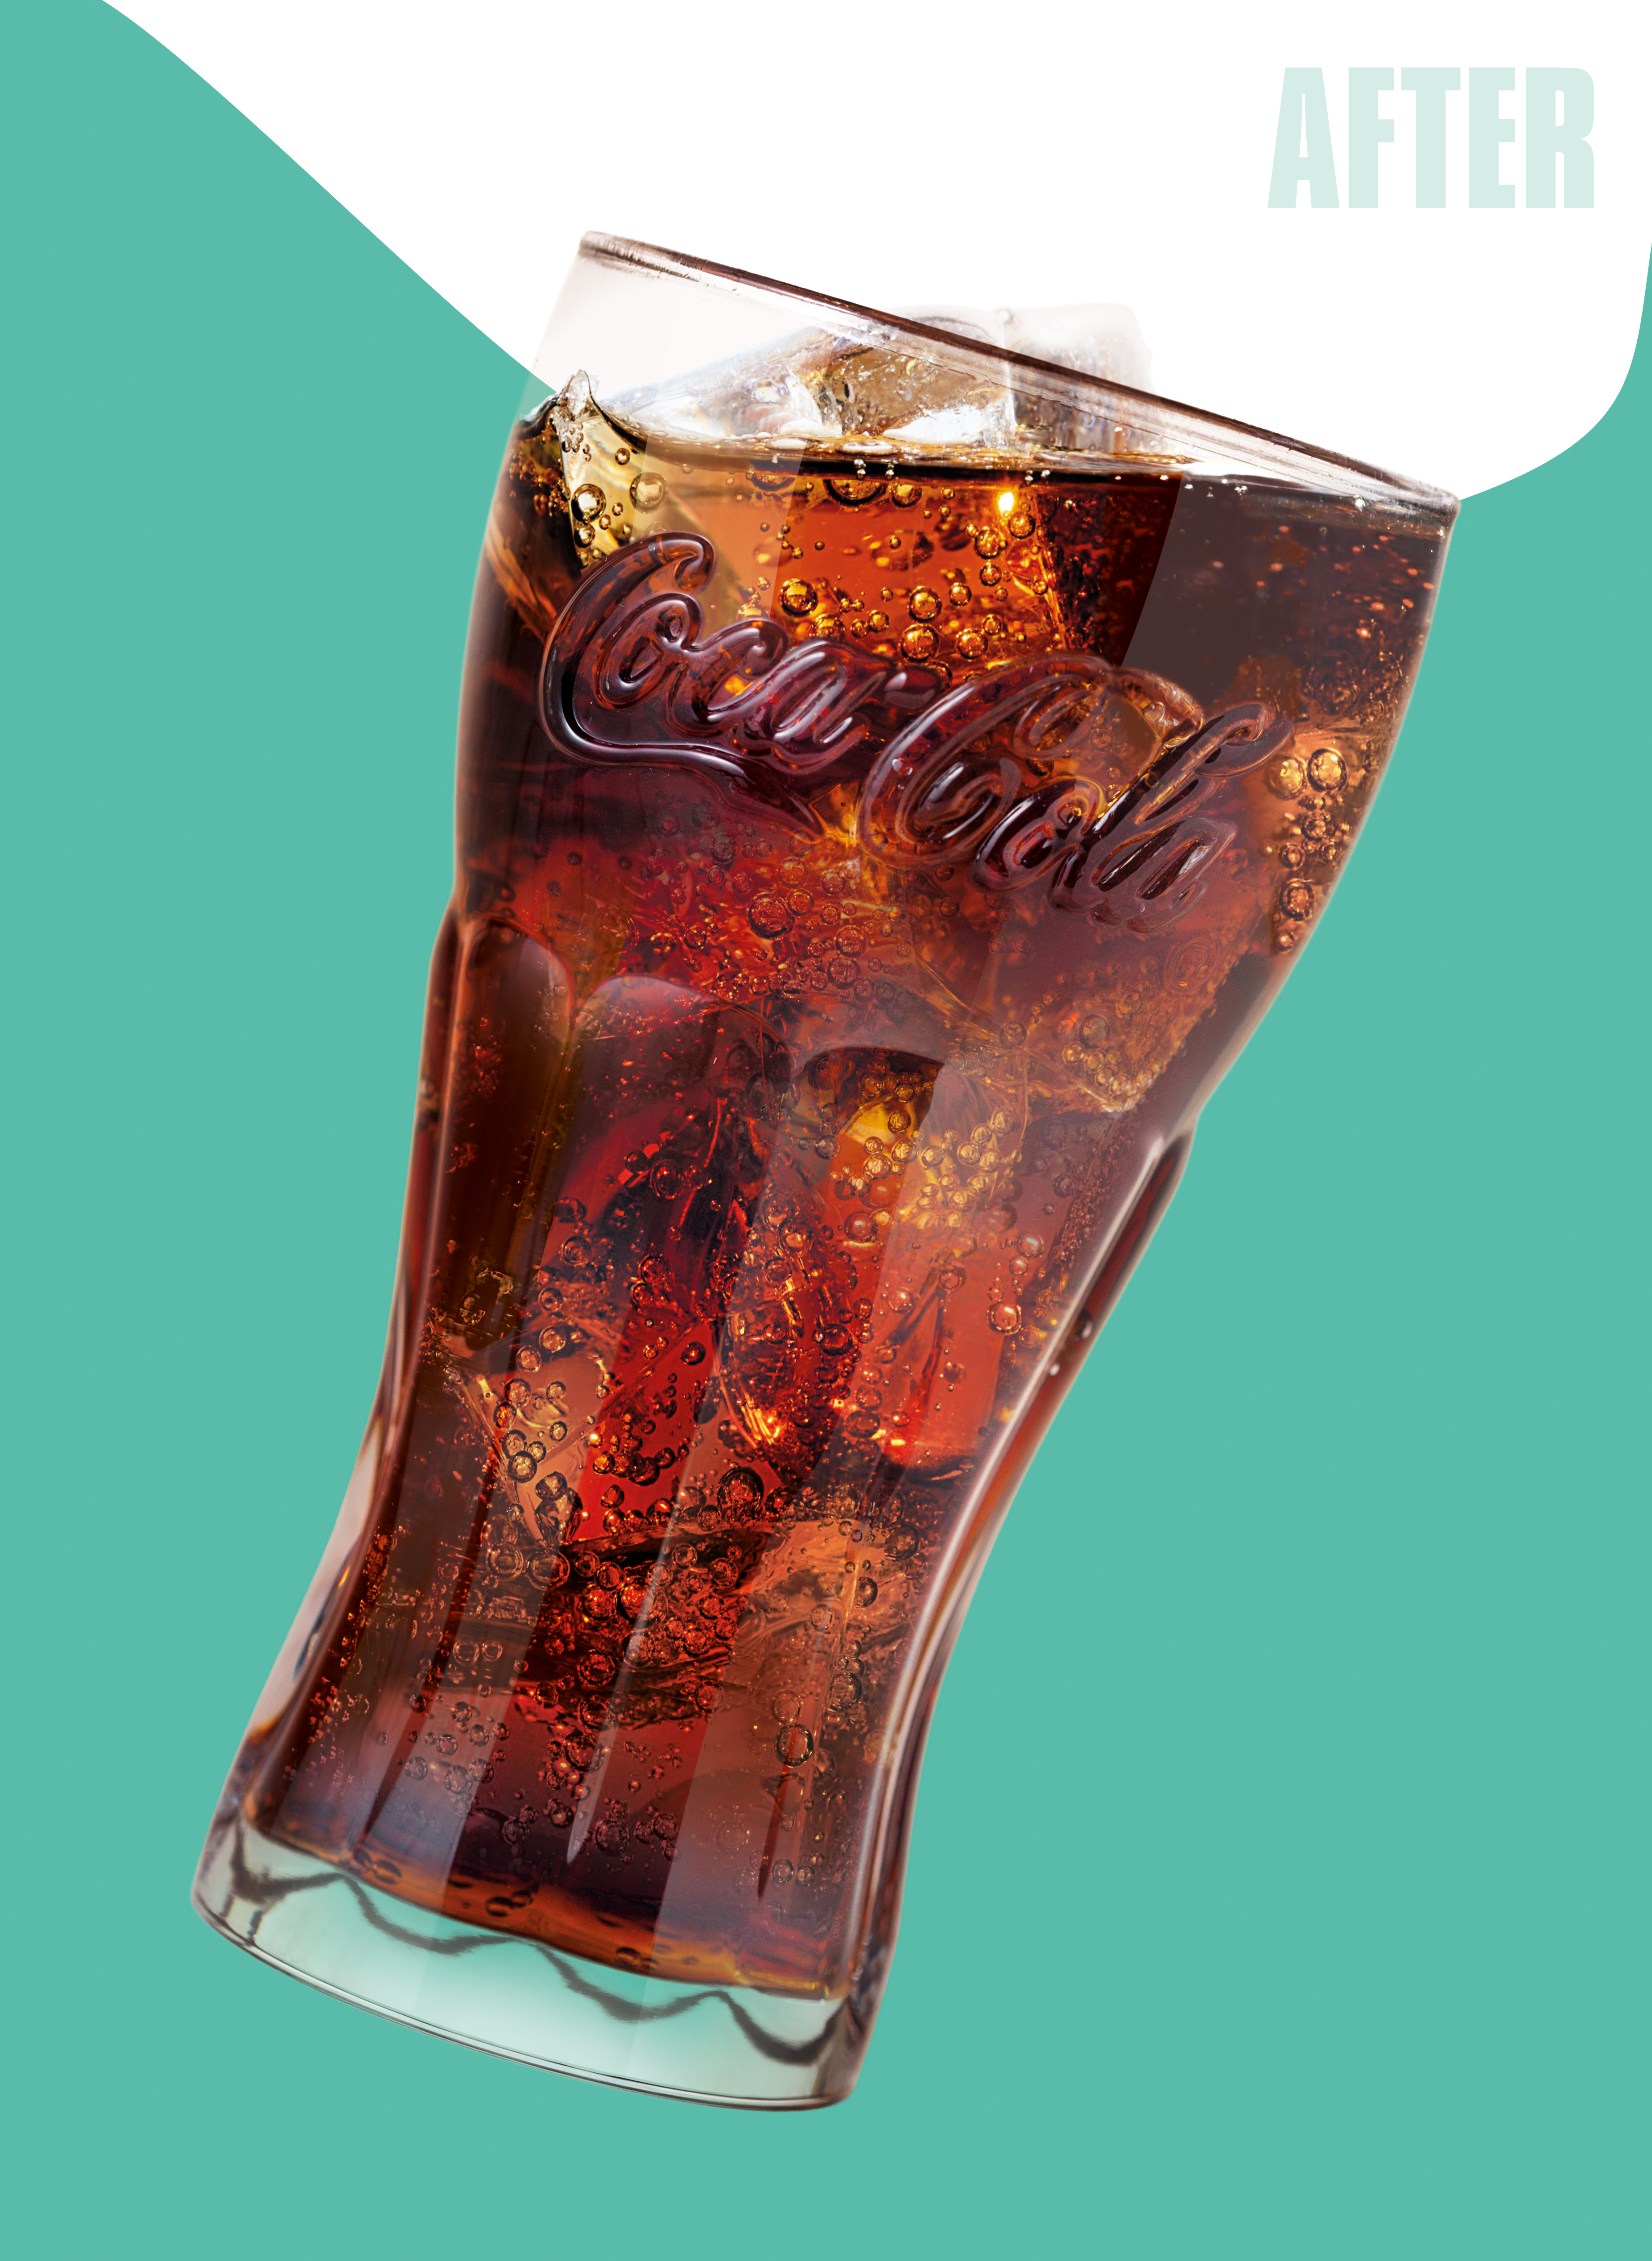 Curvy Coke Glass, After